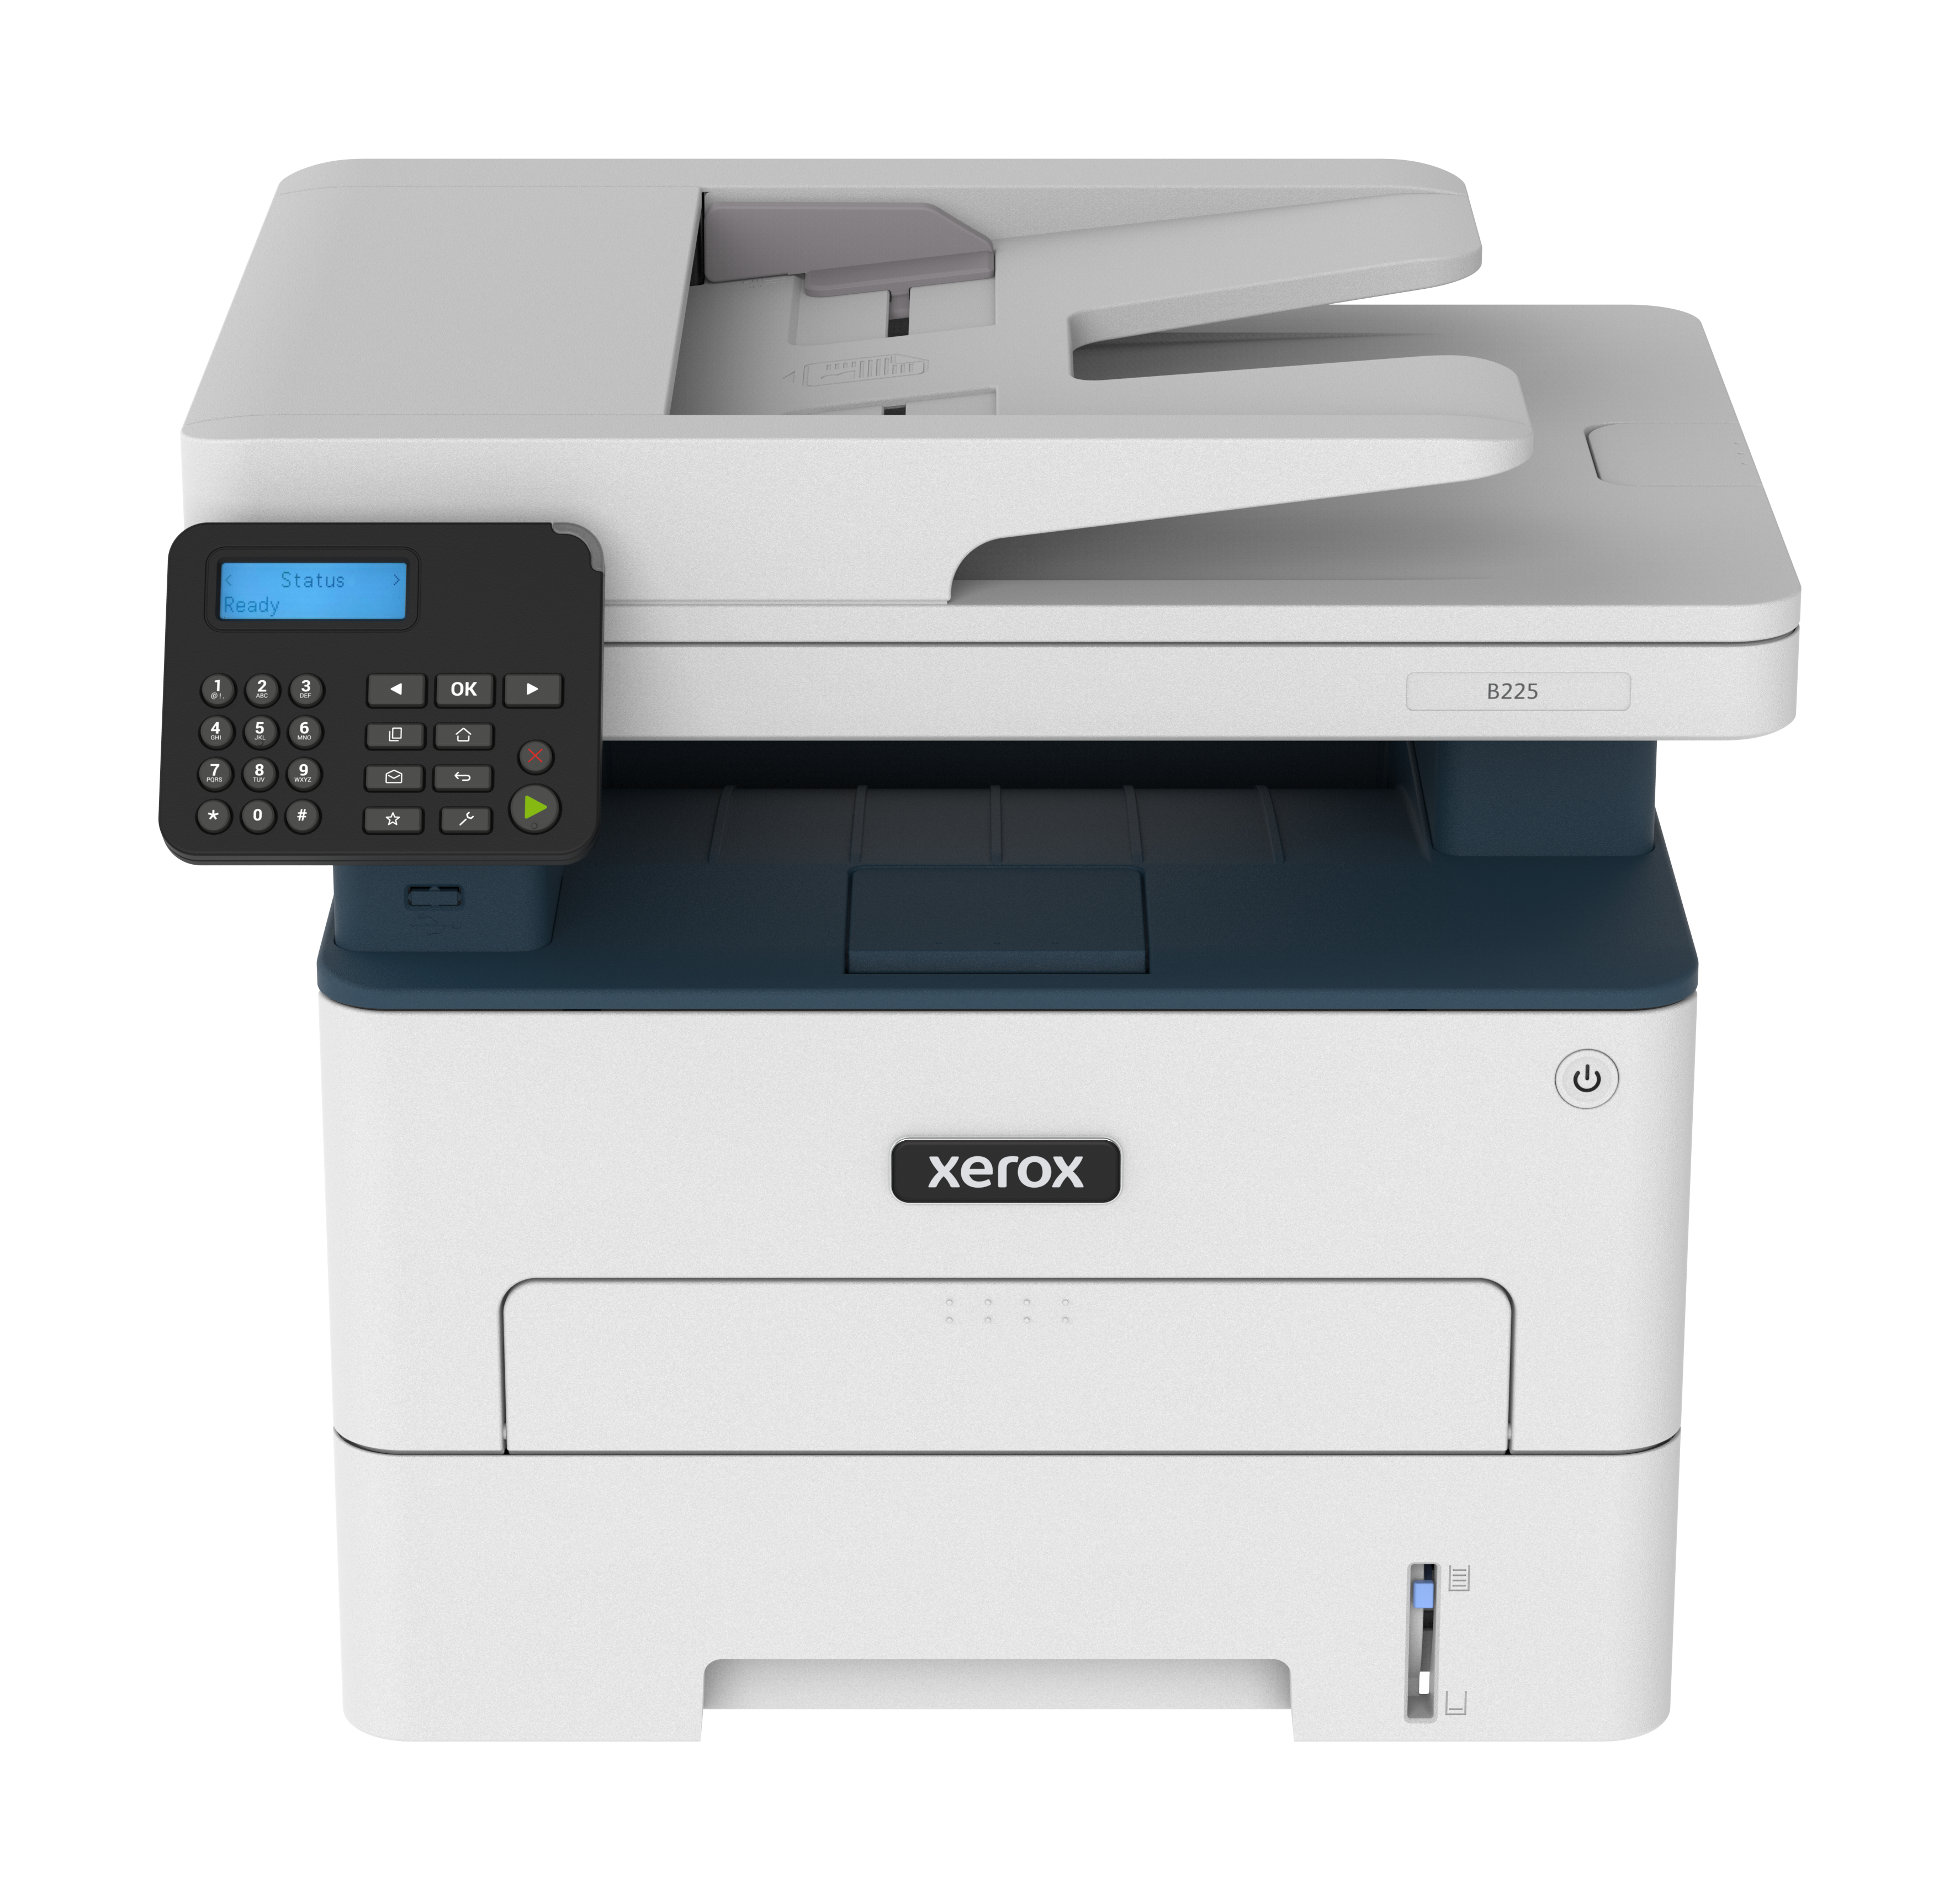 Xerox® B225 Multifunction Printer - Front